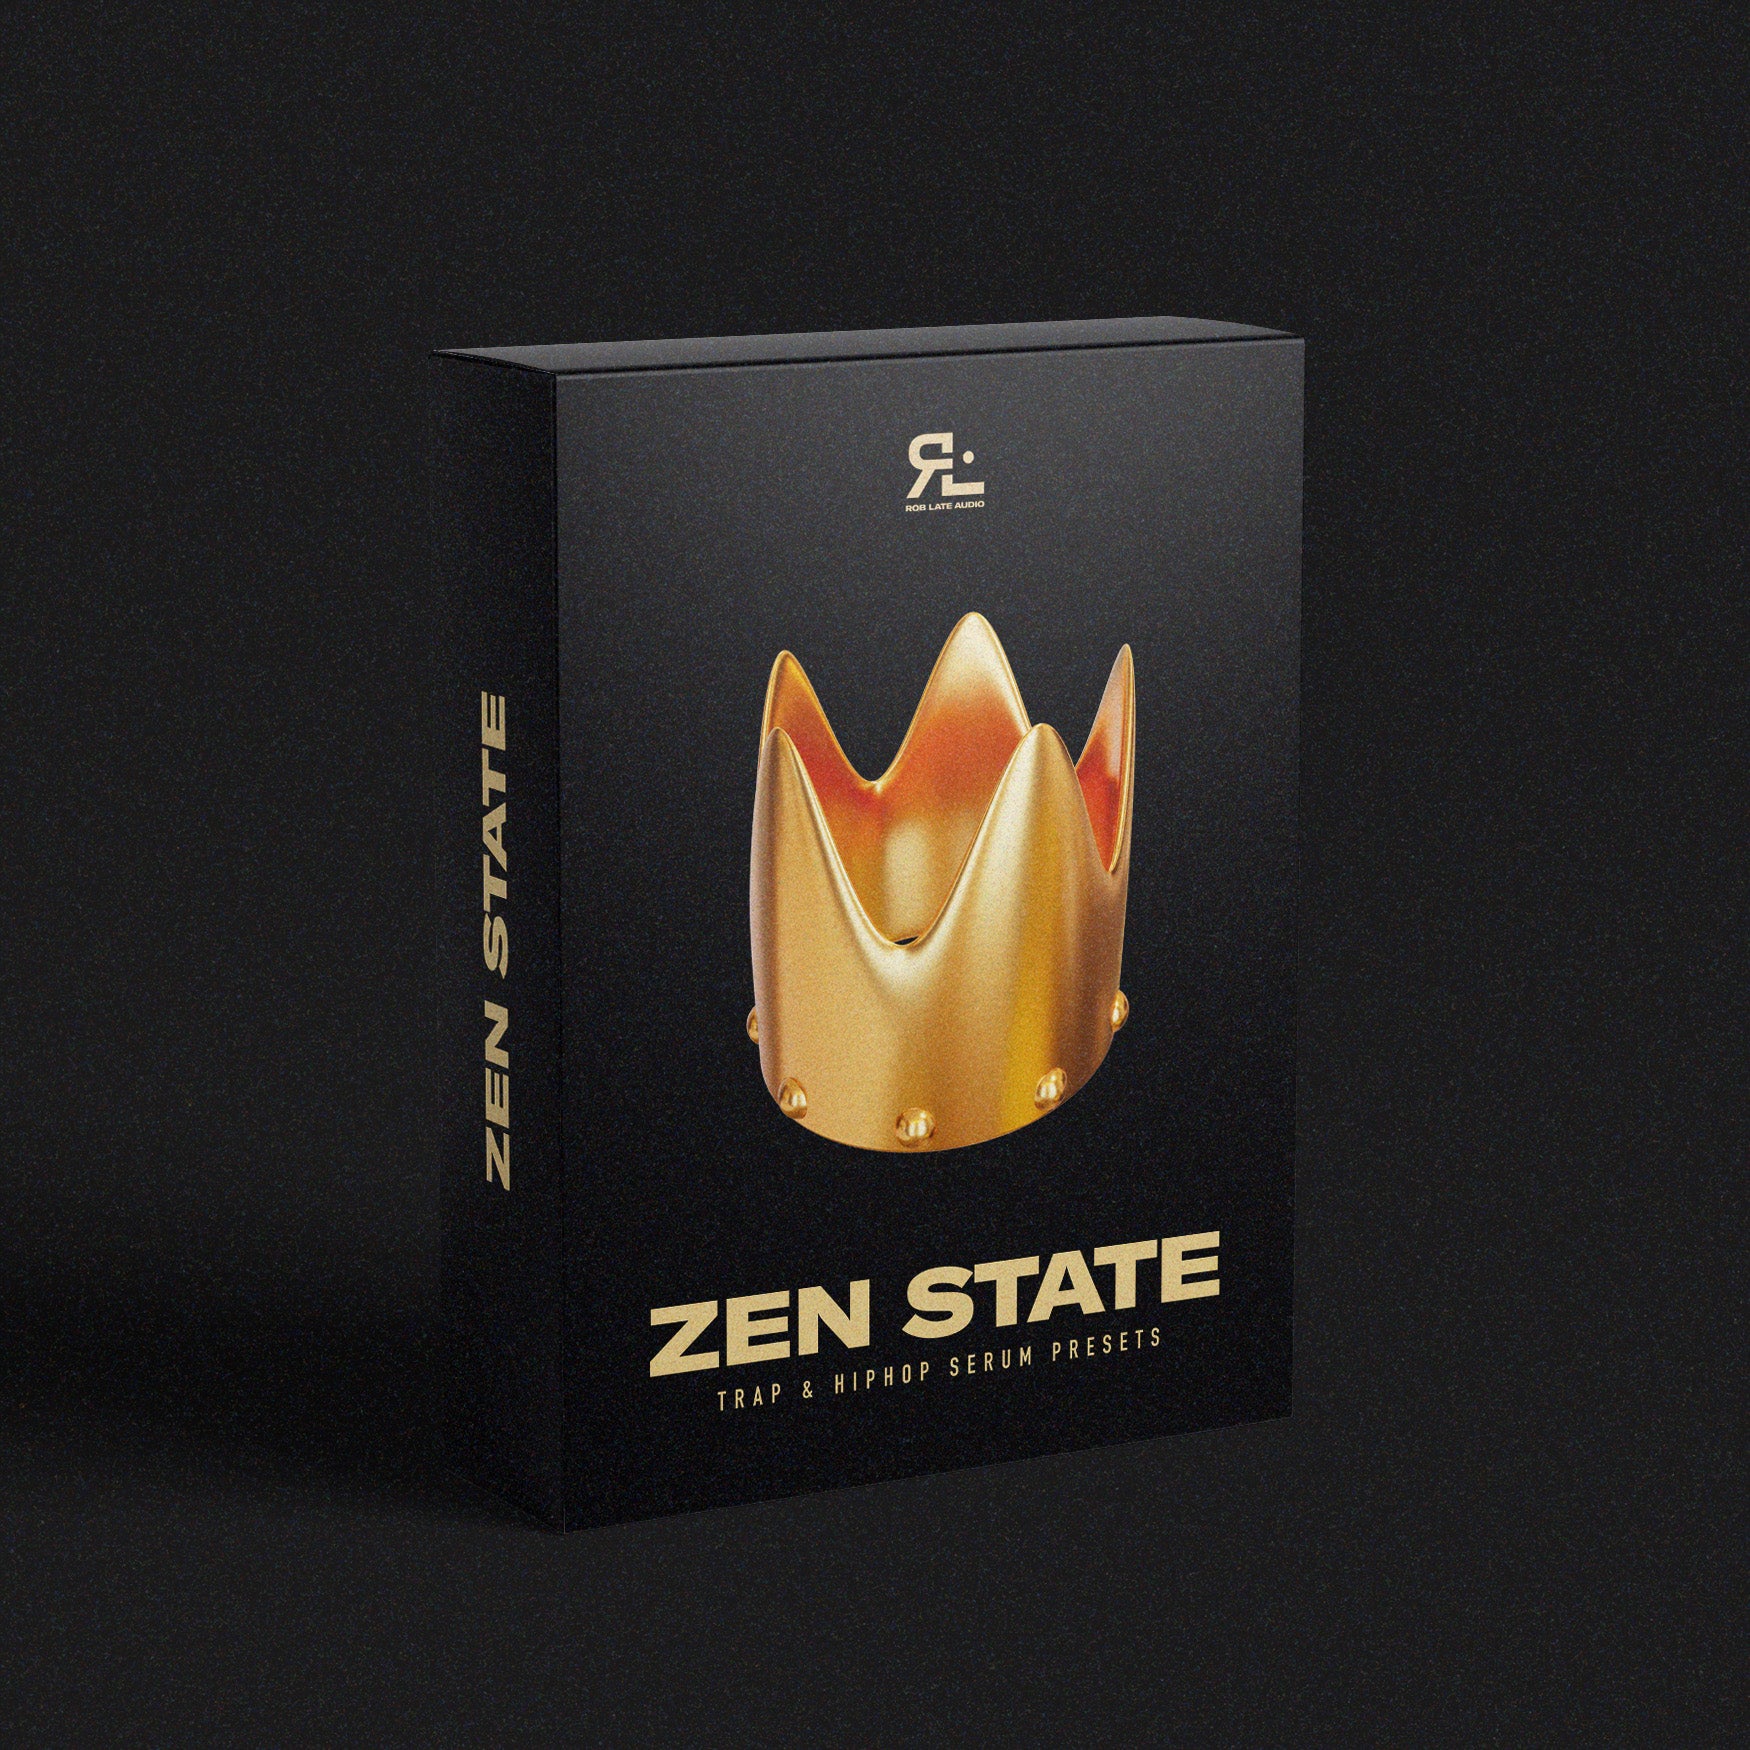 Zen State - Trap & Hip Hop Serum Presets